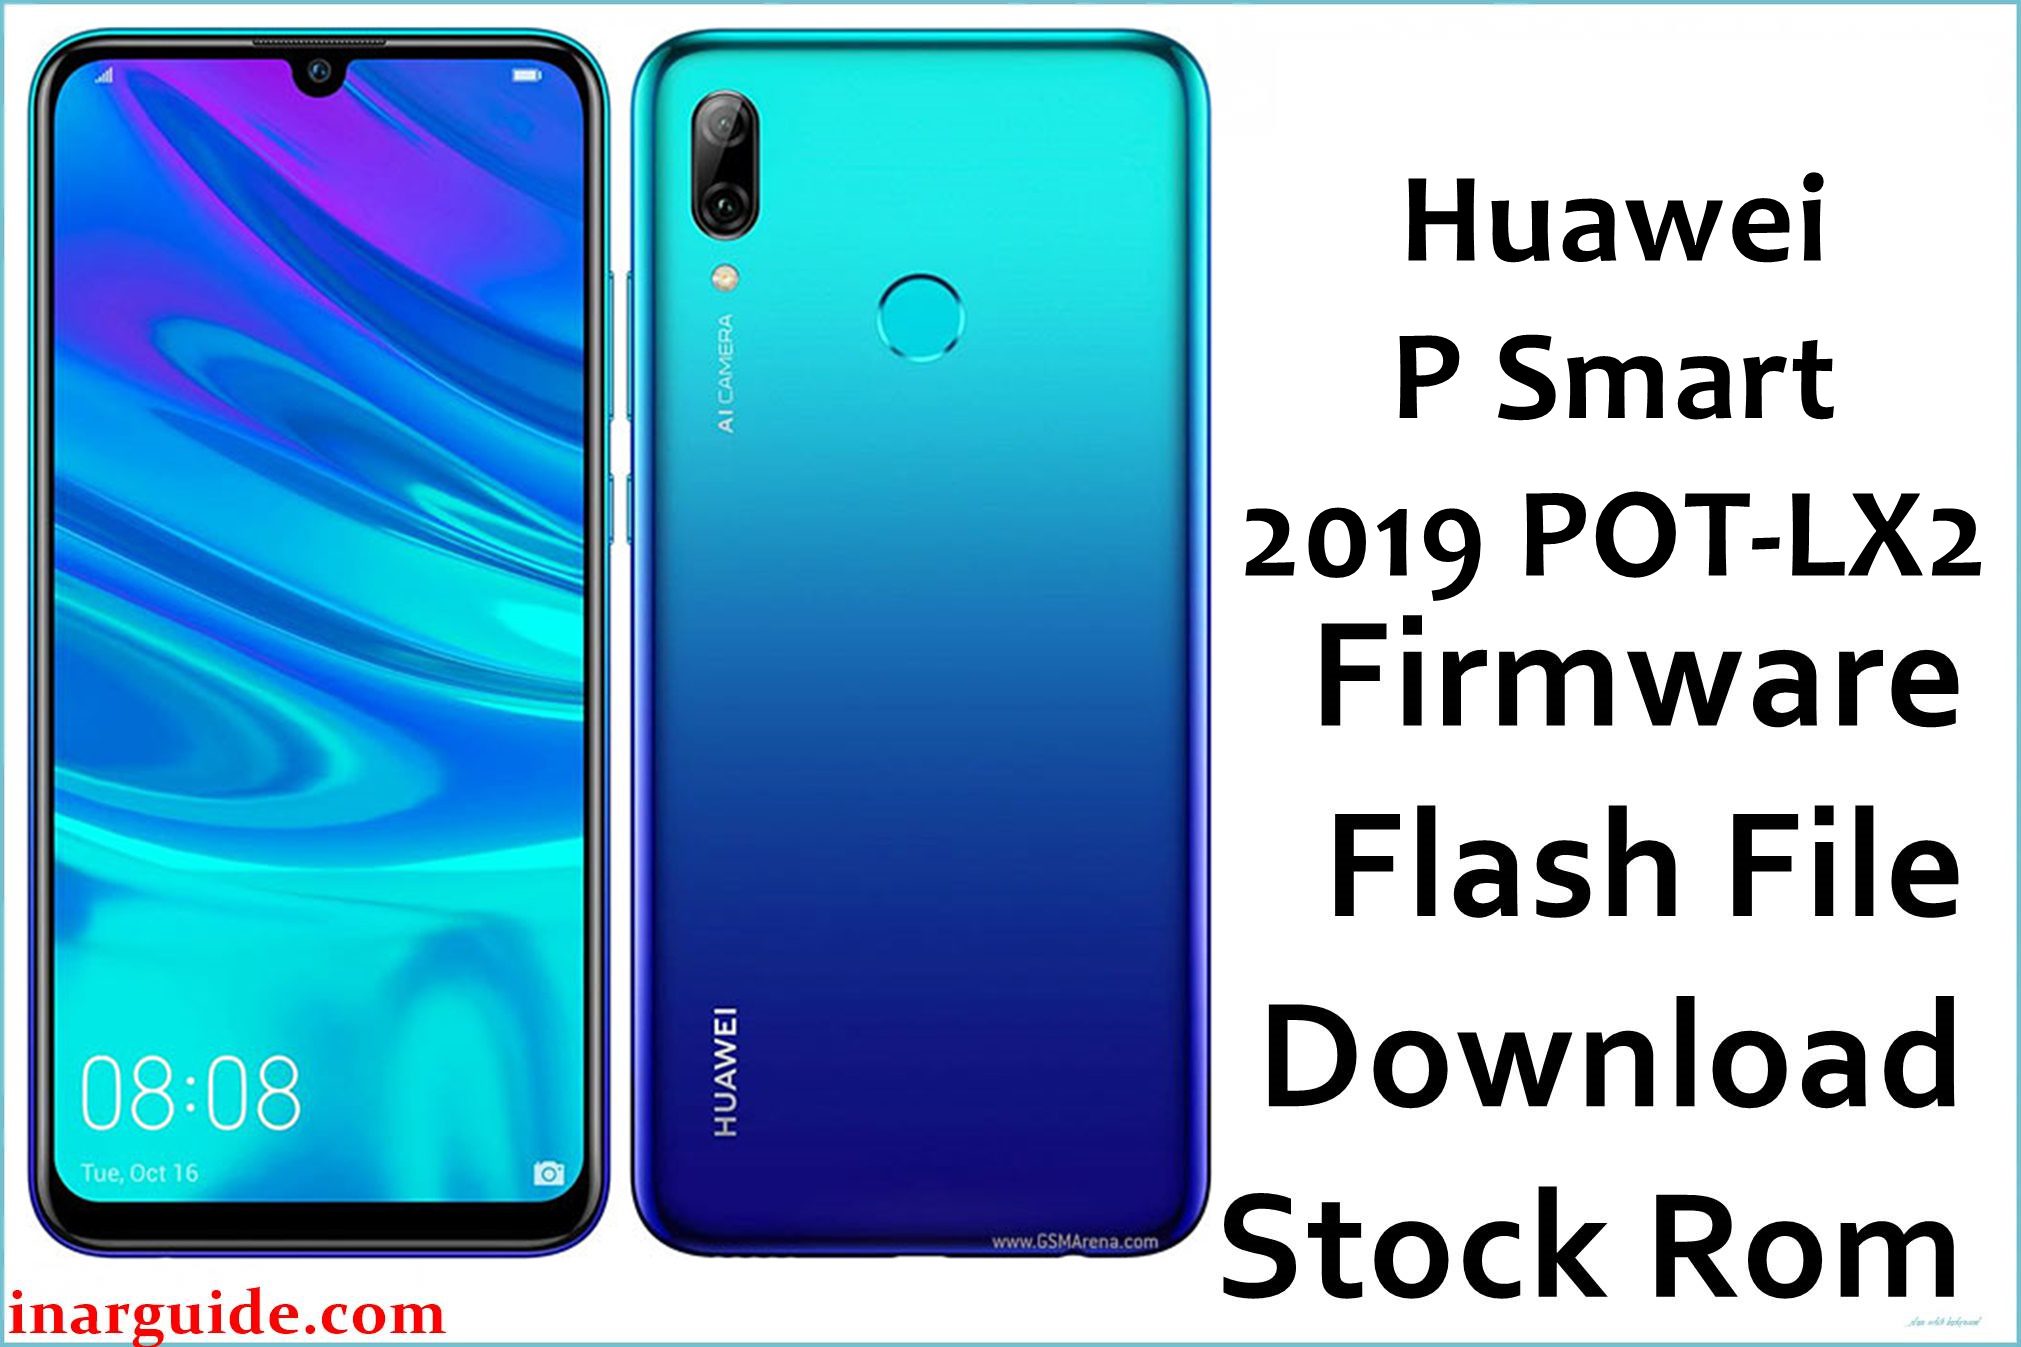 Huawei P Smart 2019 POT LX2